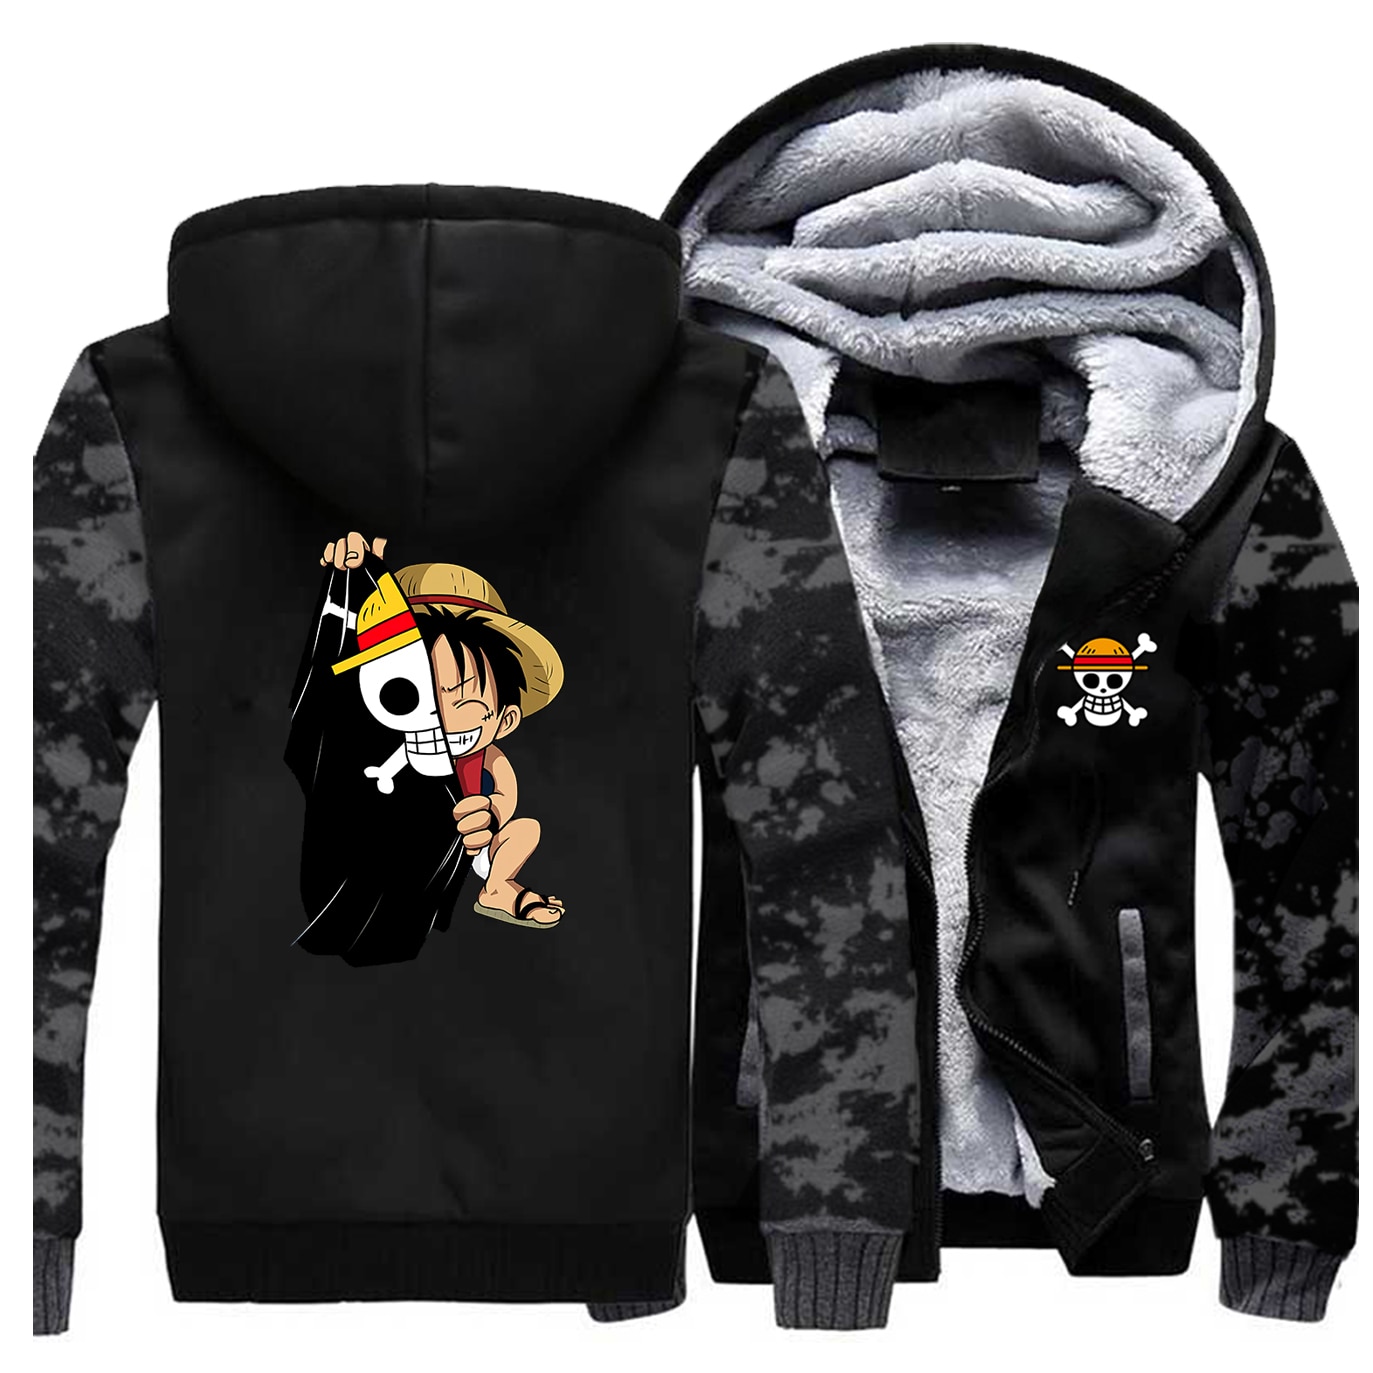 One Piece – Luffy themed Hoodies (7 Designs) Hoodies & Sweatshirts